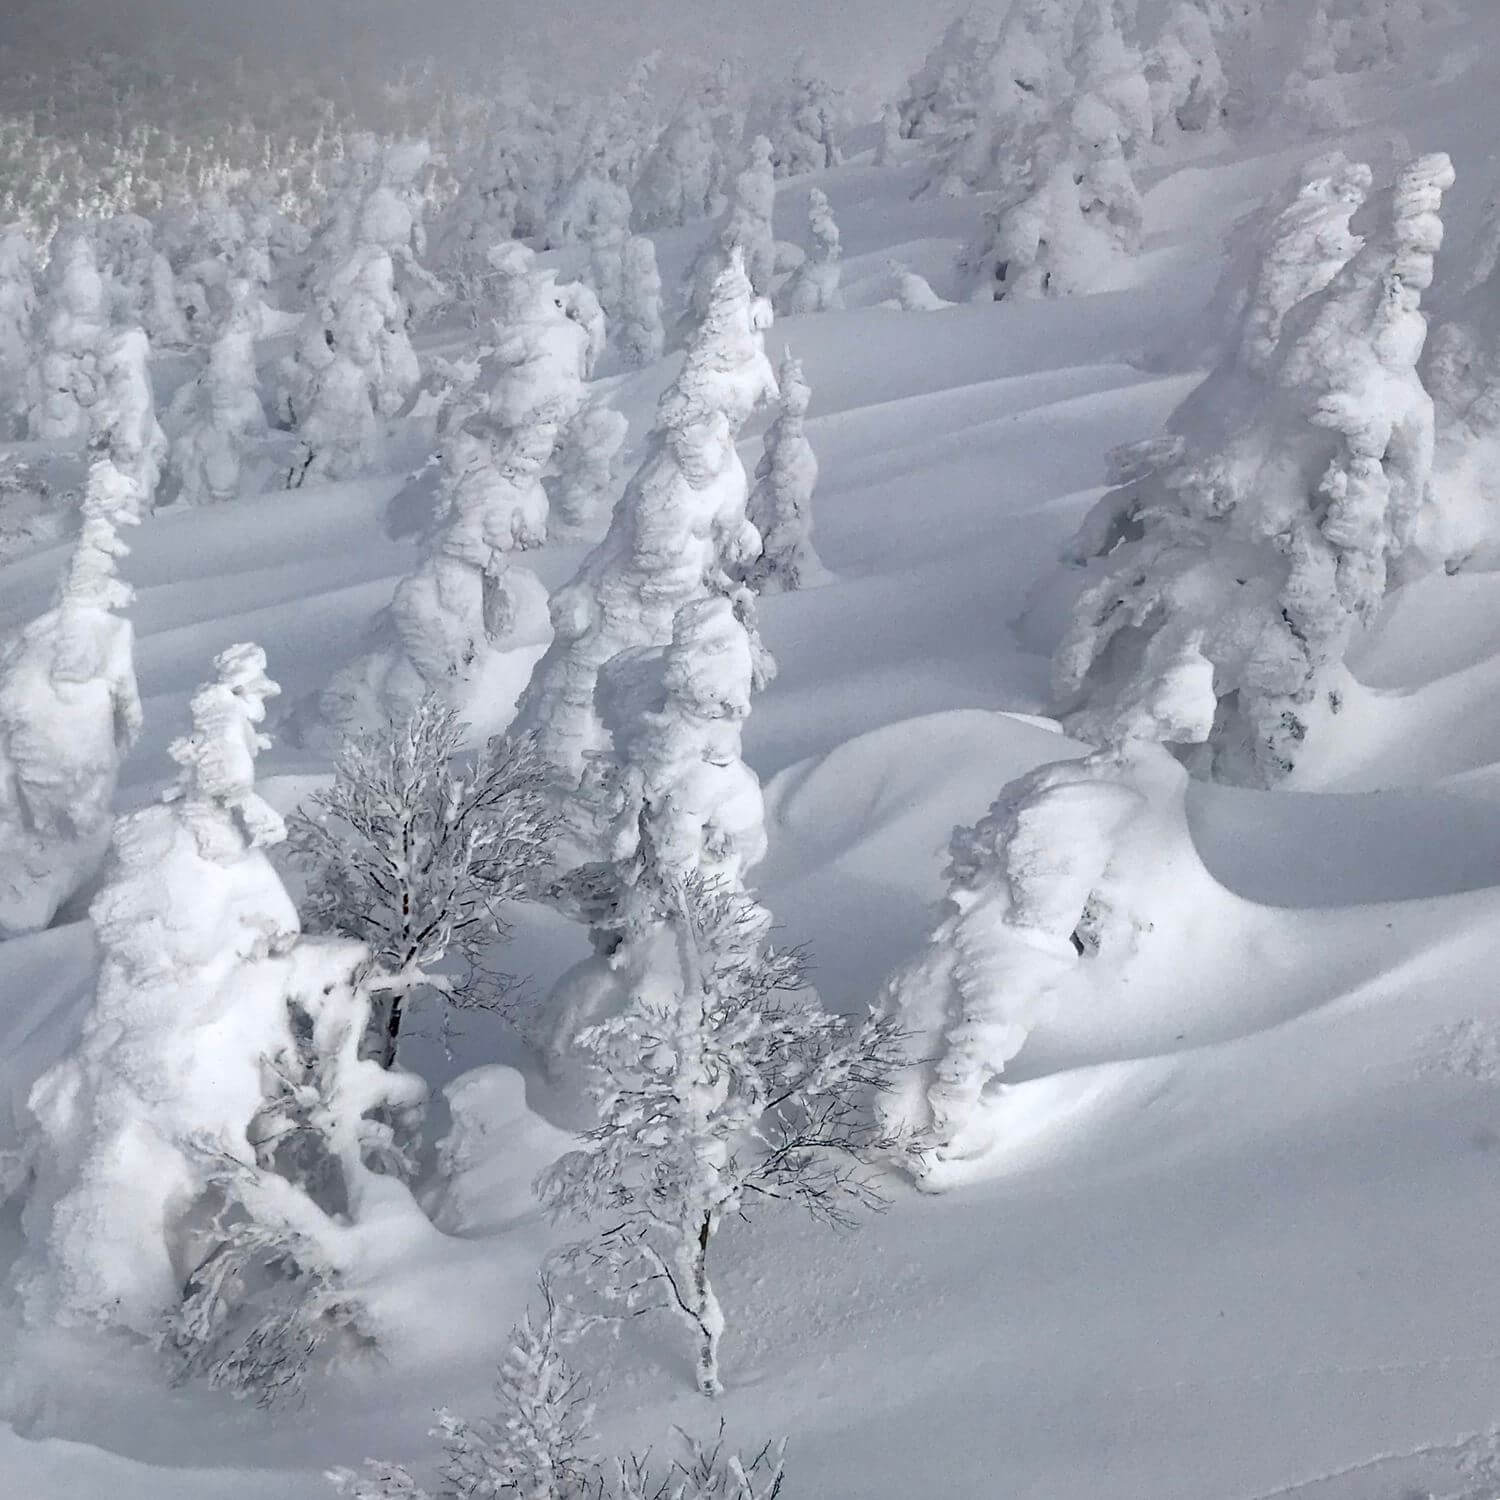 Hakkoda mountain in heavy snowfall, Aomori Prefecture, Japan = Shutterstock 4